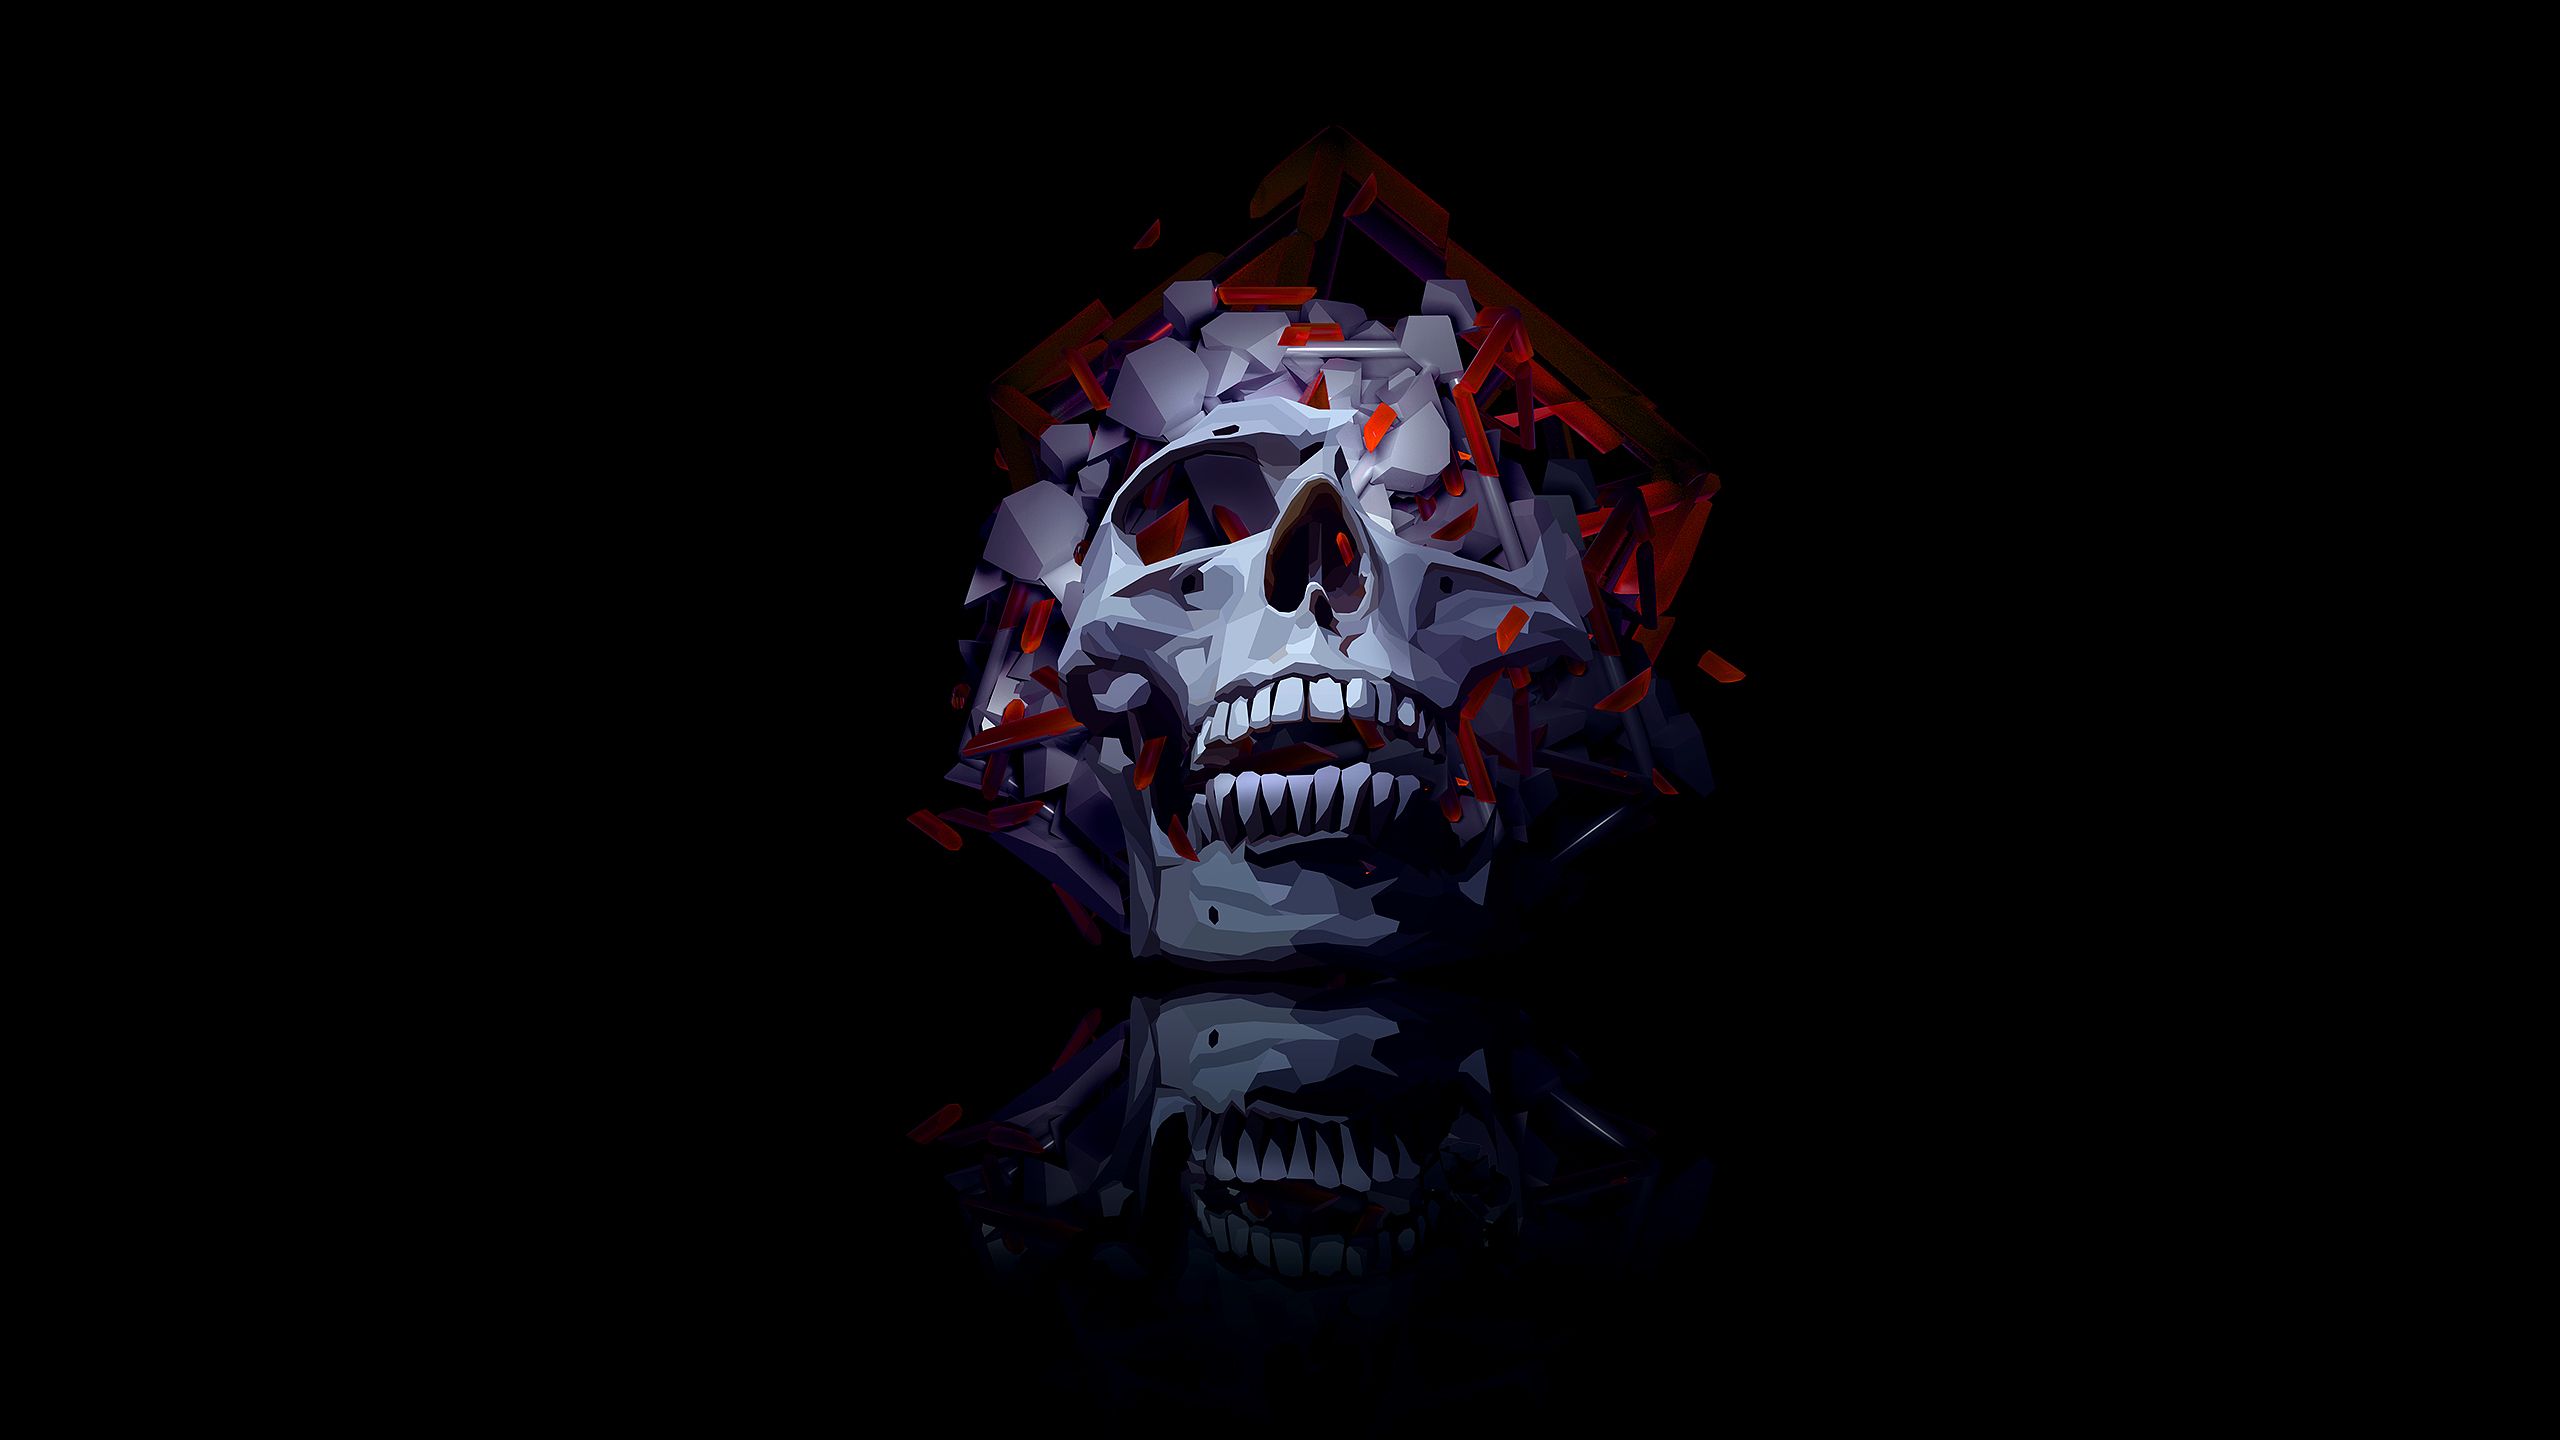 Smoky Skull Wallpaper, HD Artist 4K Wallpaper, Image, Photo and Background